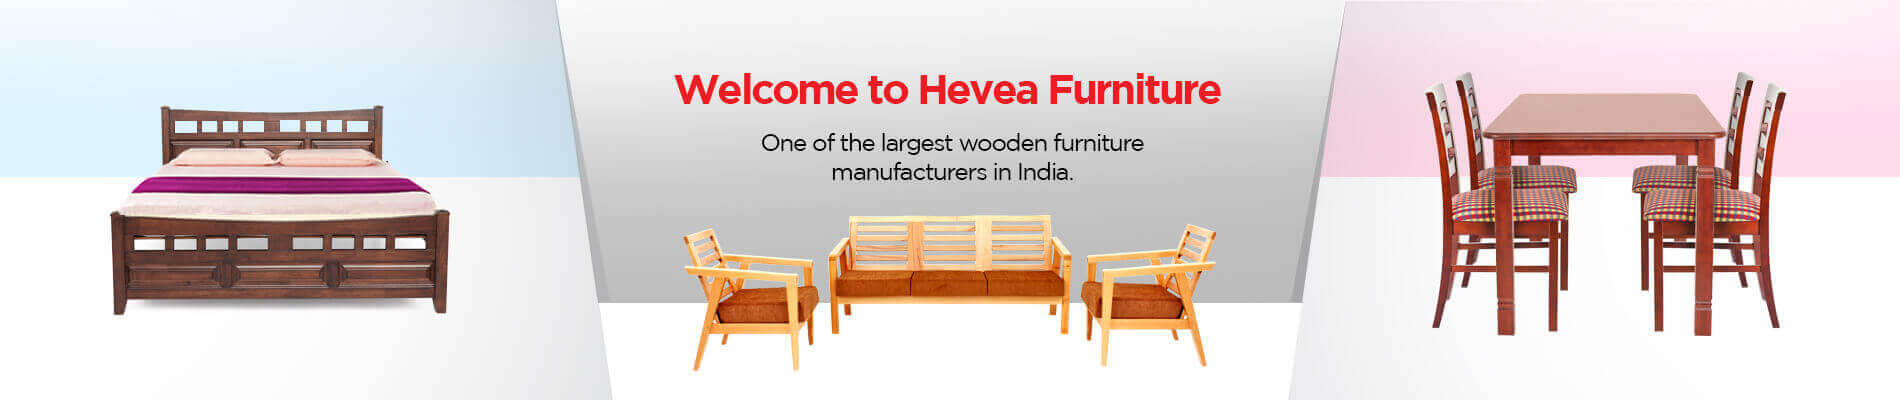 Wooden Furniture Manufacturers